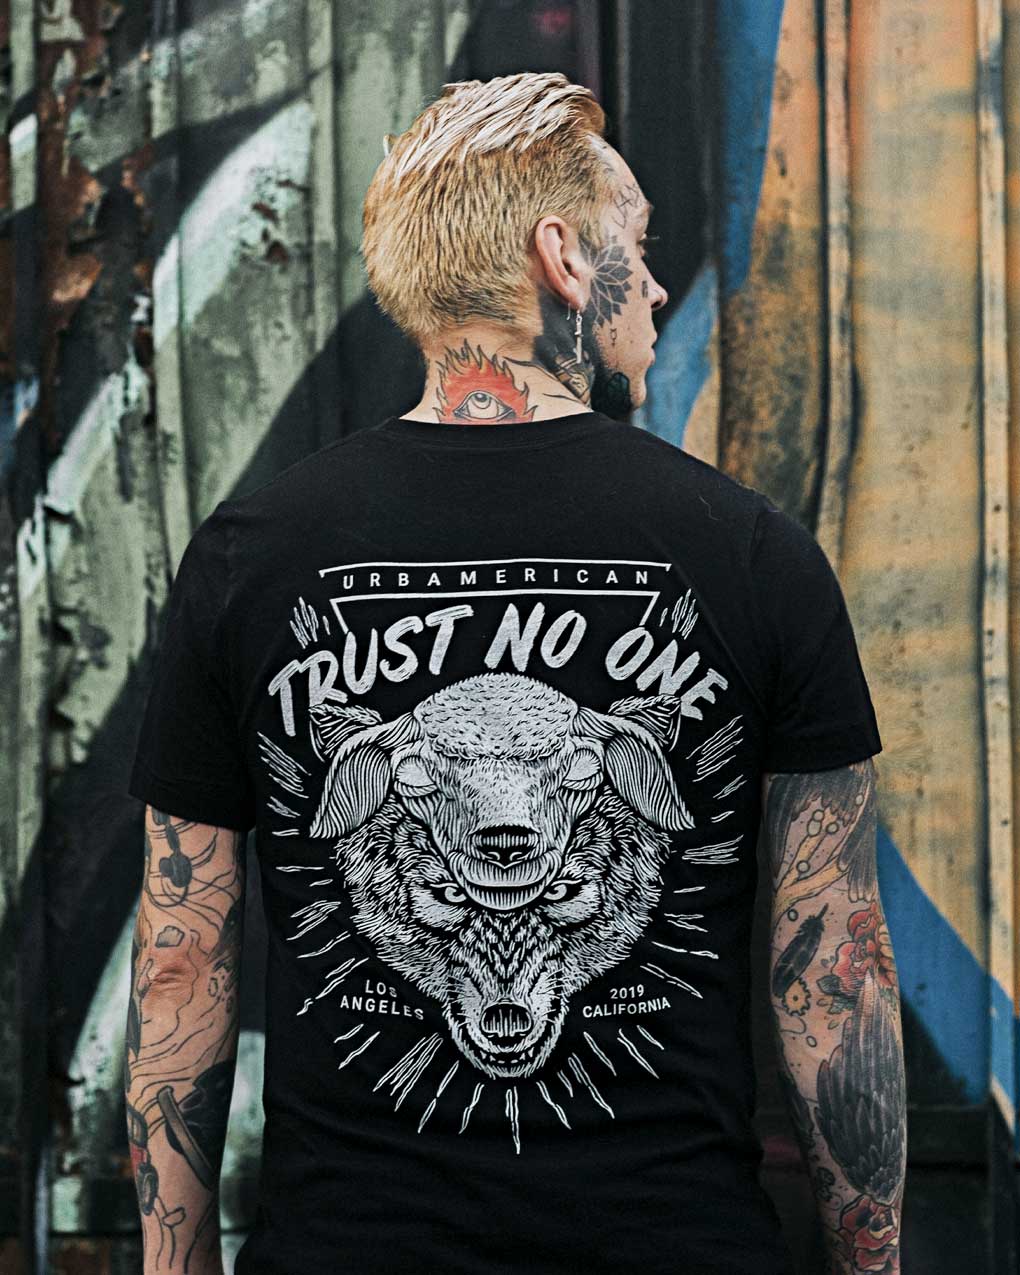 Trust No One | T-Shirt Urbamerican